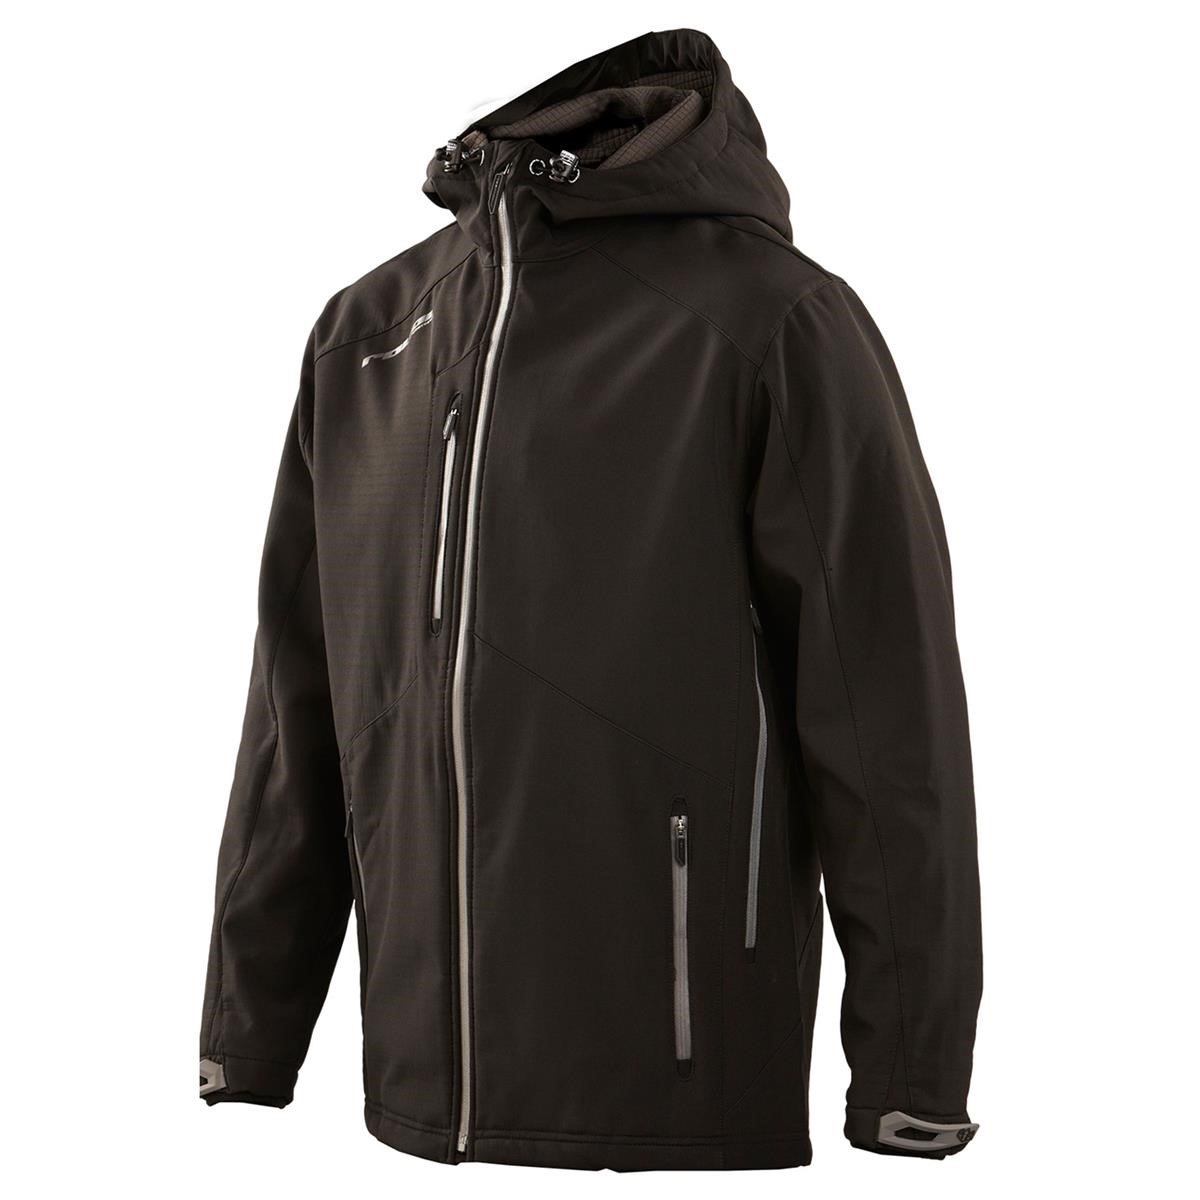 Royal Racing Softshell Jacket Alpine Black/Graphite